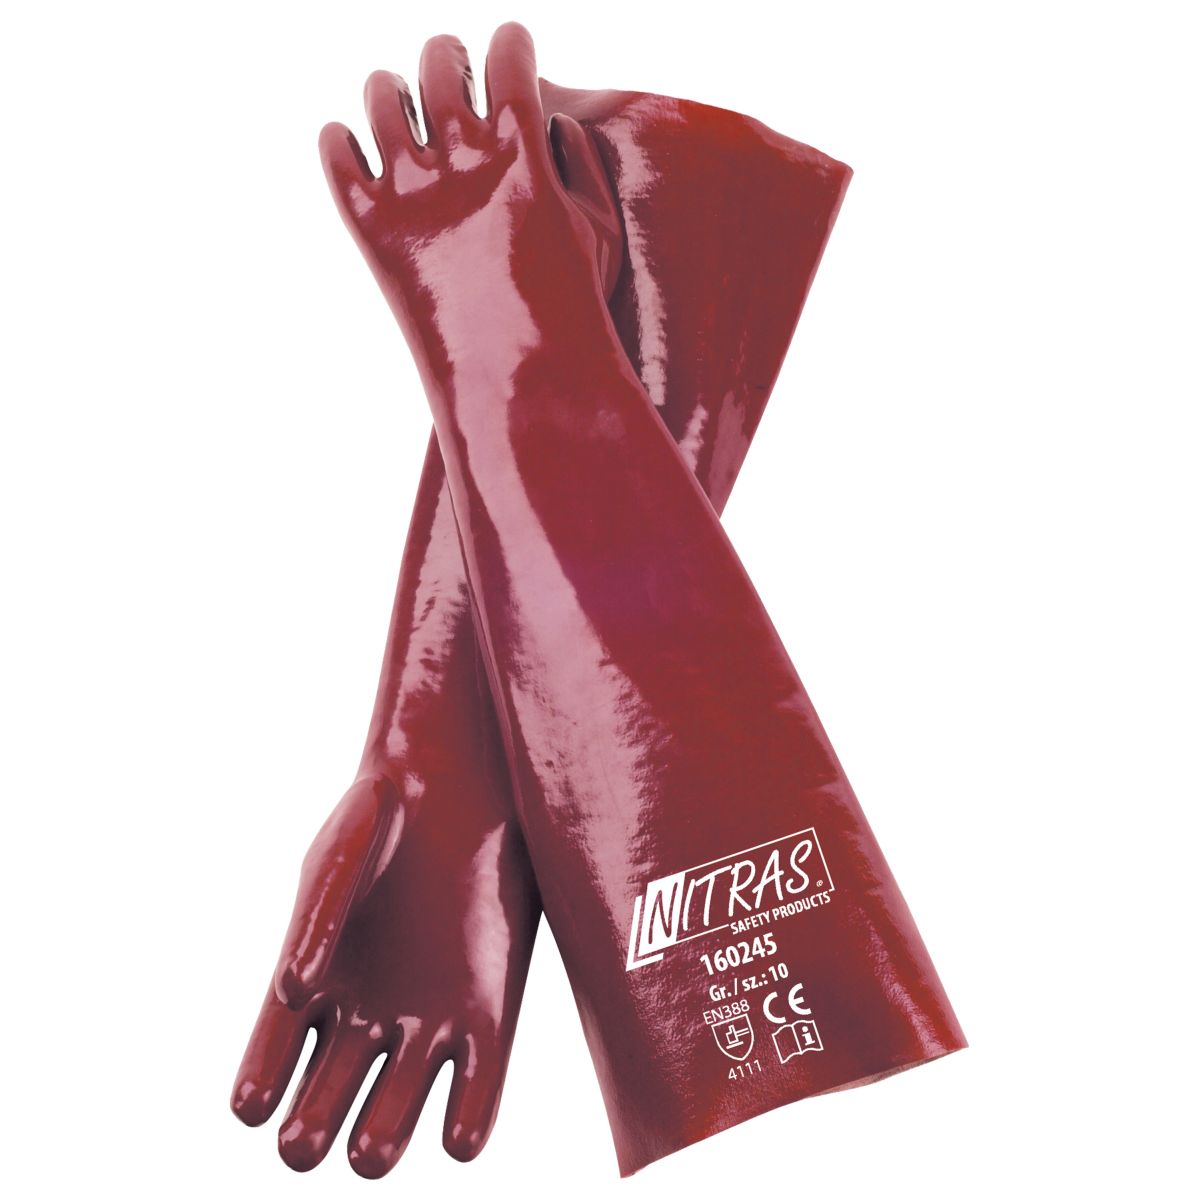 NITRAS 160245 PVC-Handschuhe, rot, vollbeschichtet auf Baumwollträger, 45cm Länge